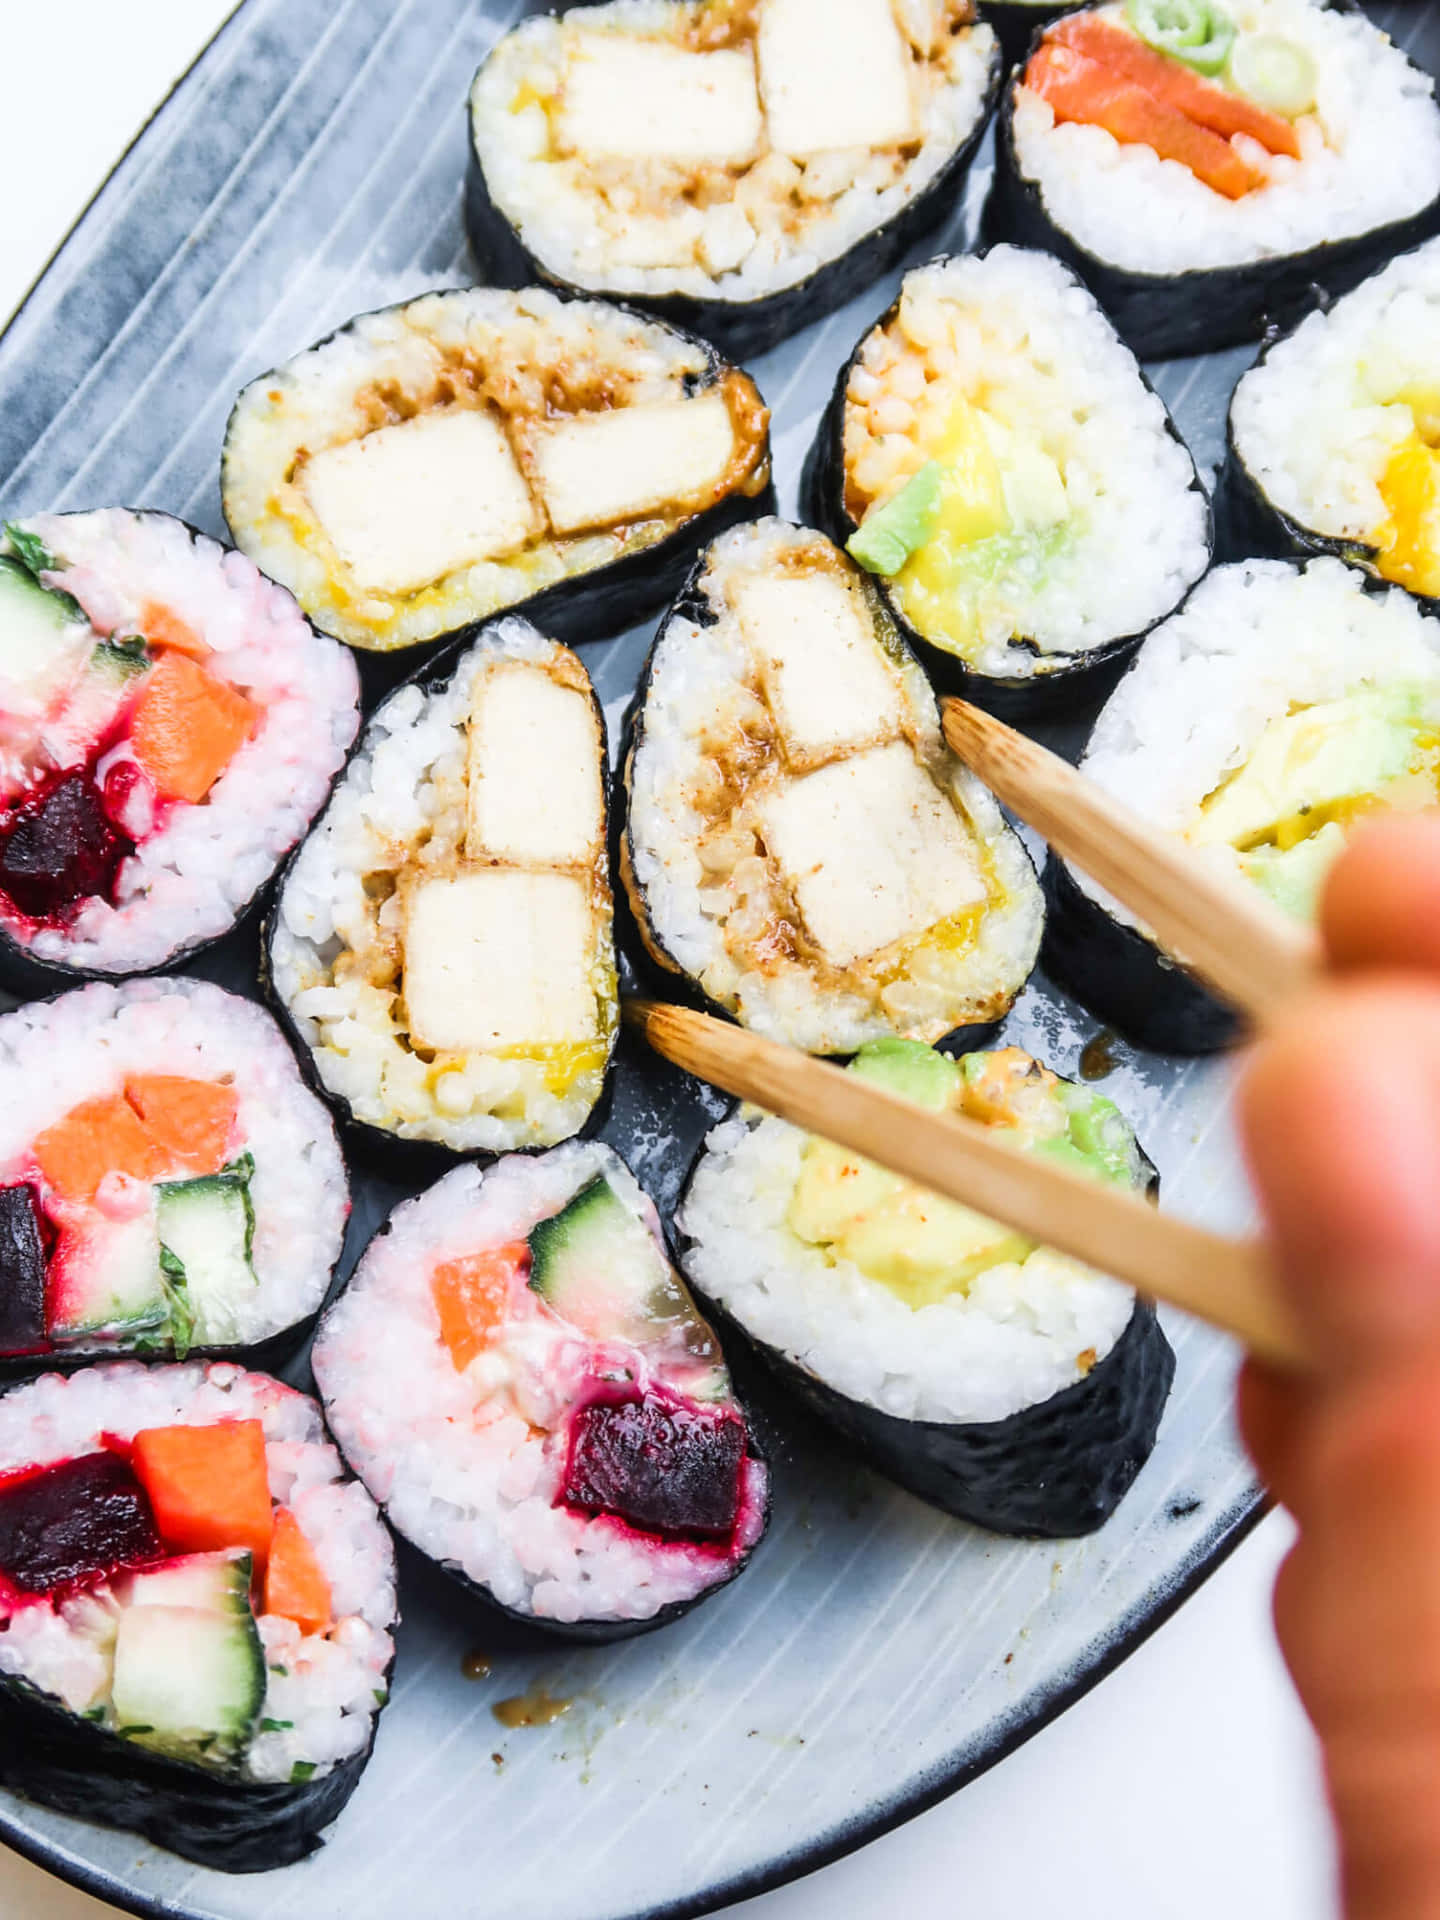 Nydfrisk Og Autentisk Sushi For Den Perfekte Smagsoplevelse.